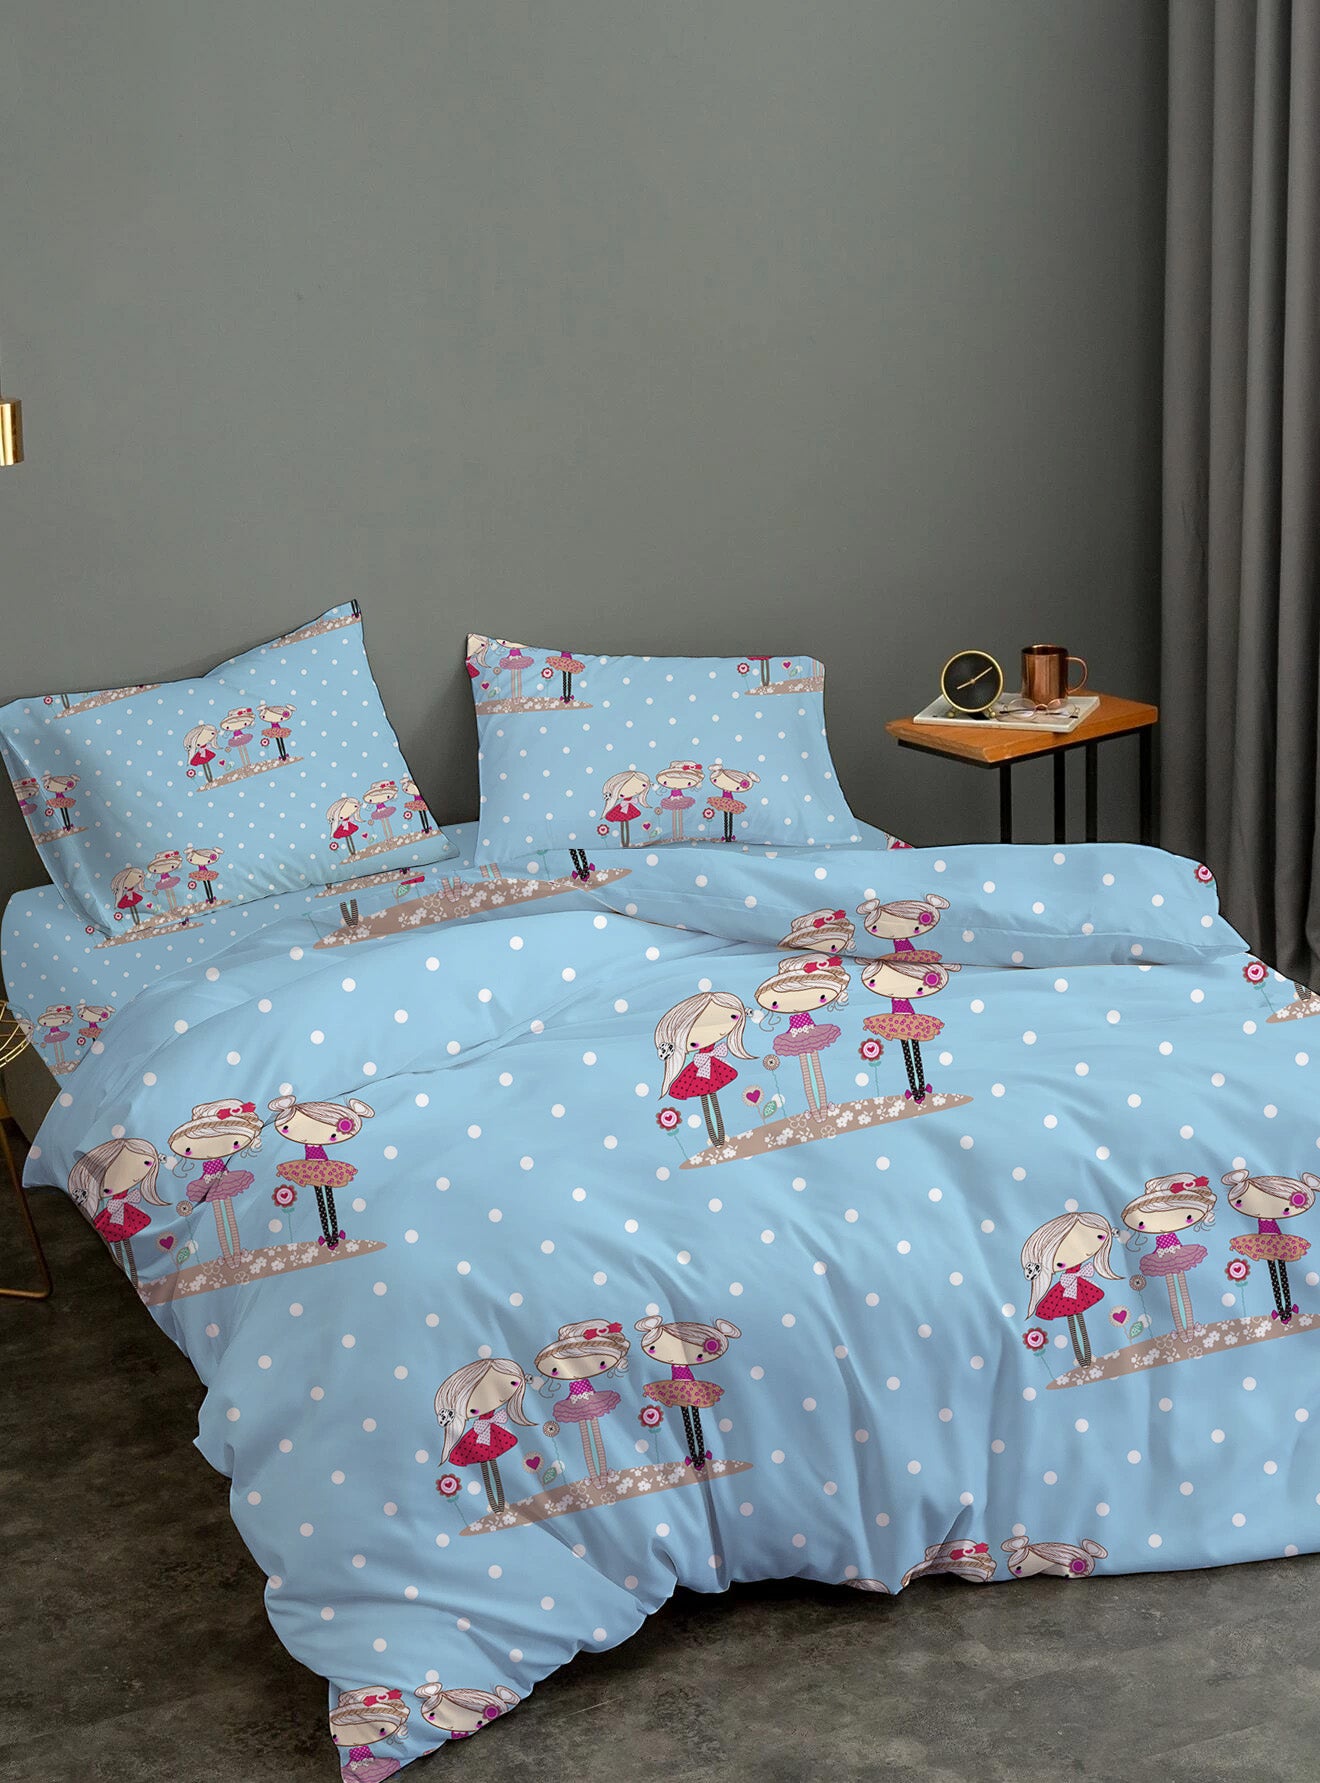 Friendlair Blue Kids Comforter 3pc Set 135x220cm